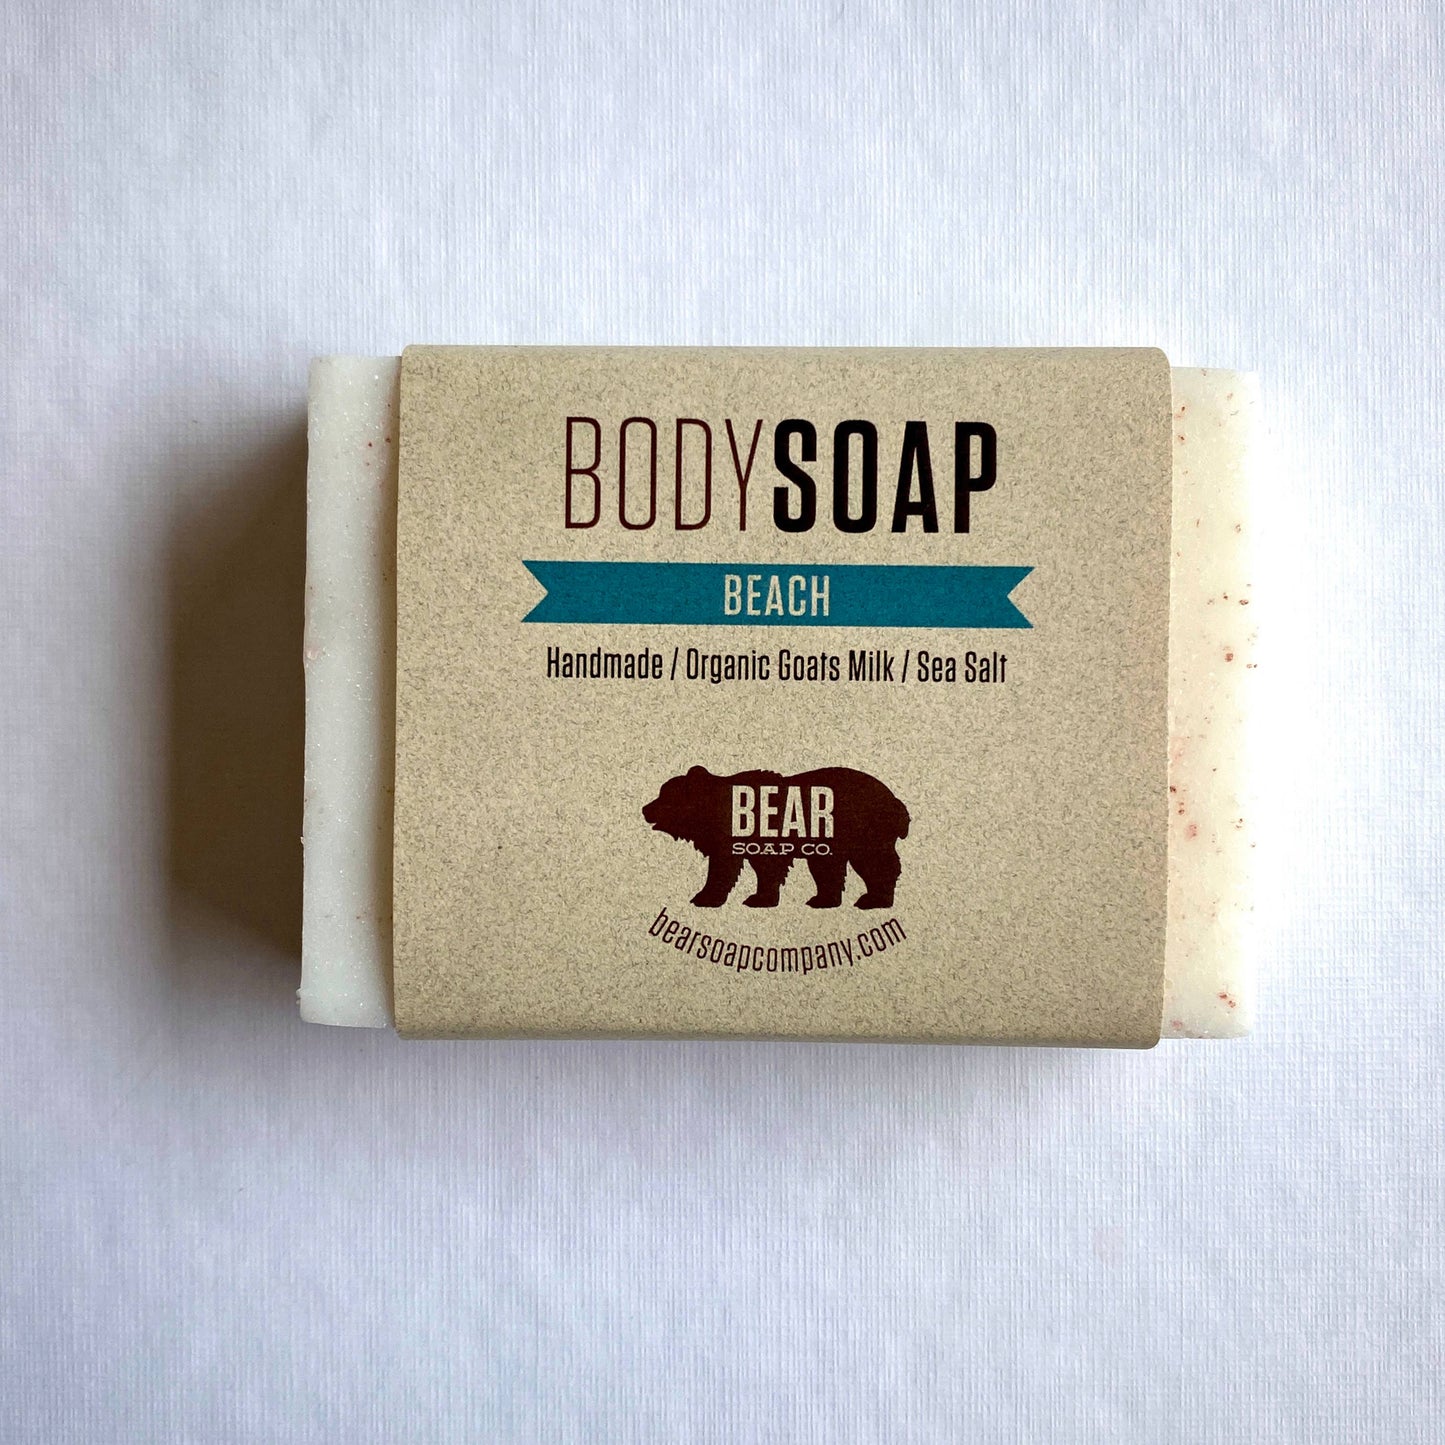 Beach Body Soap